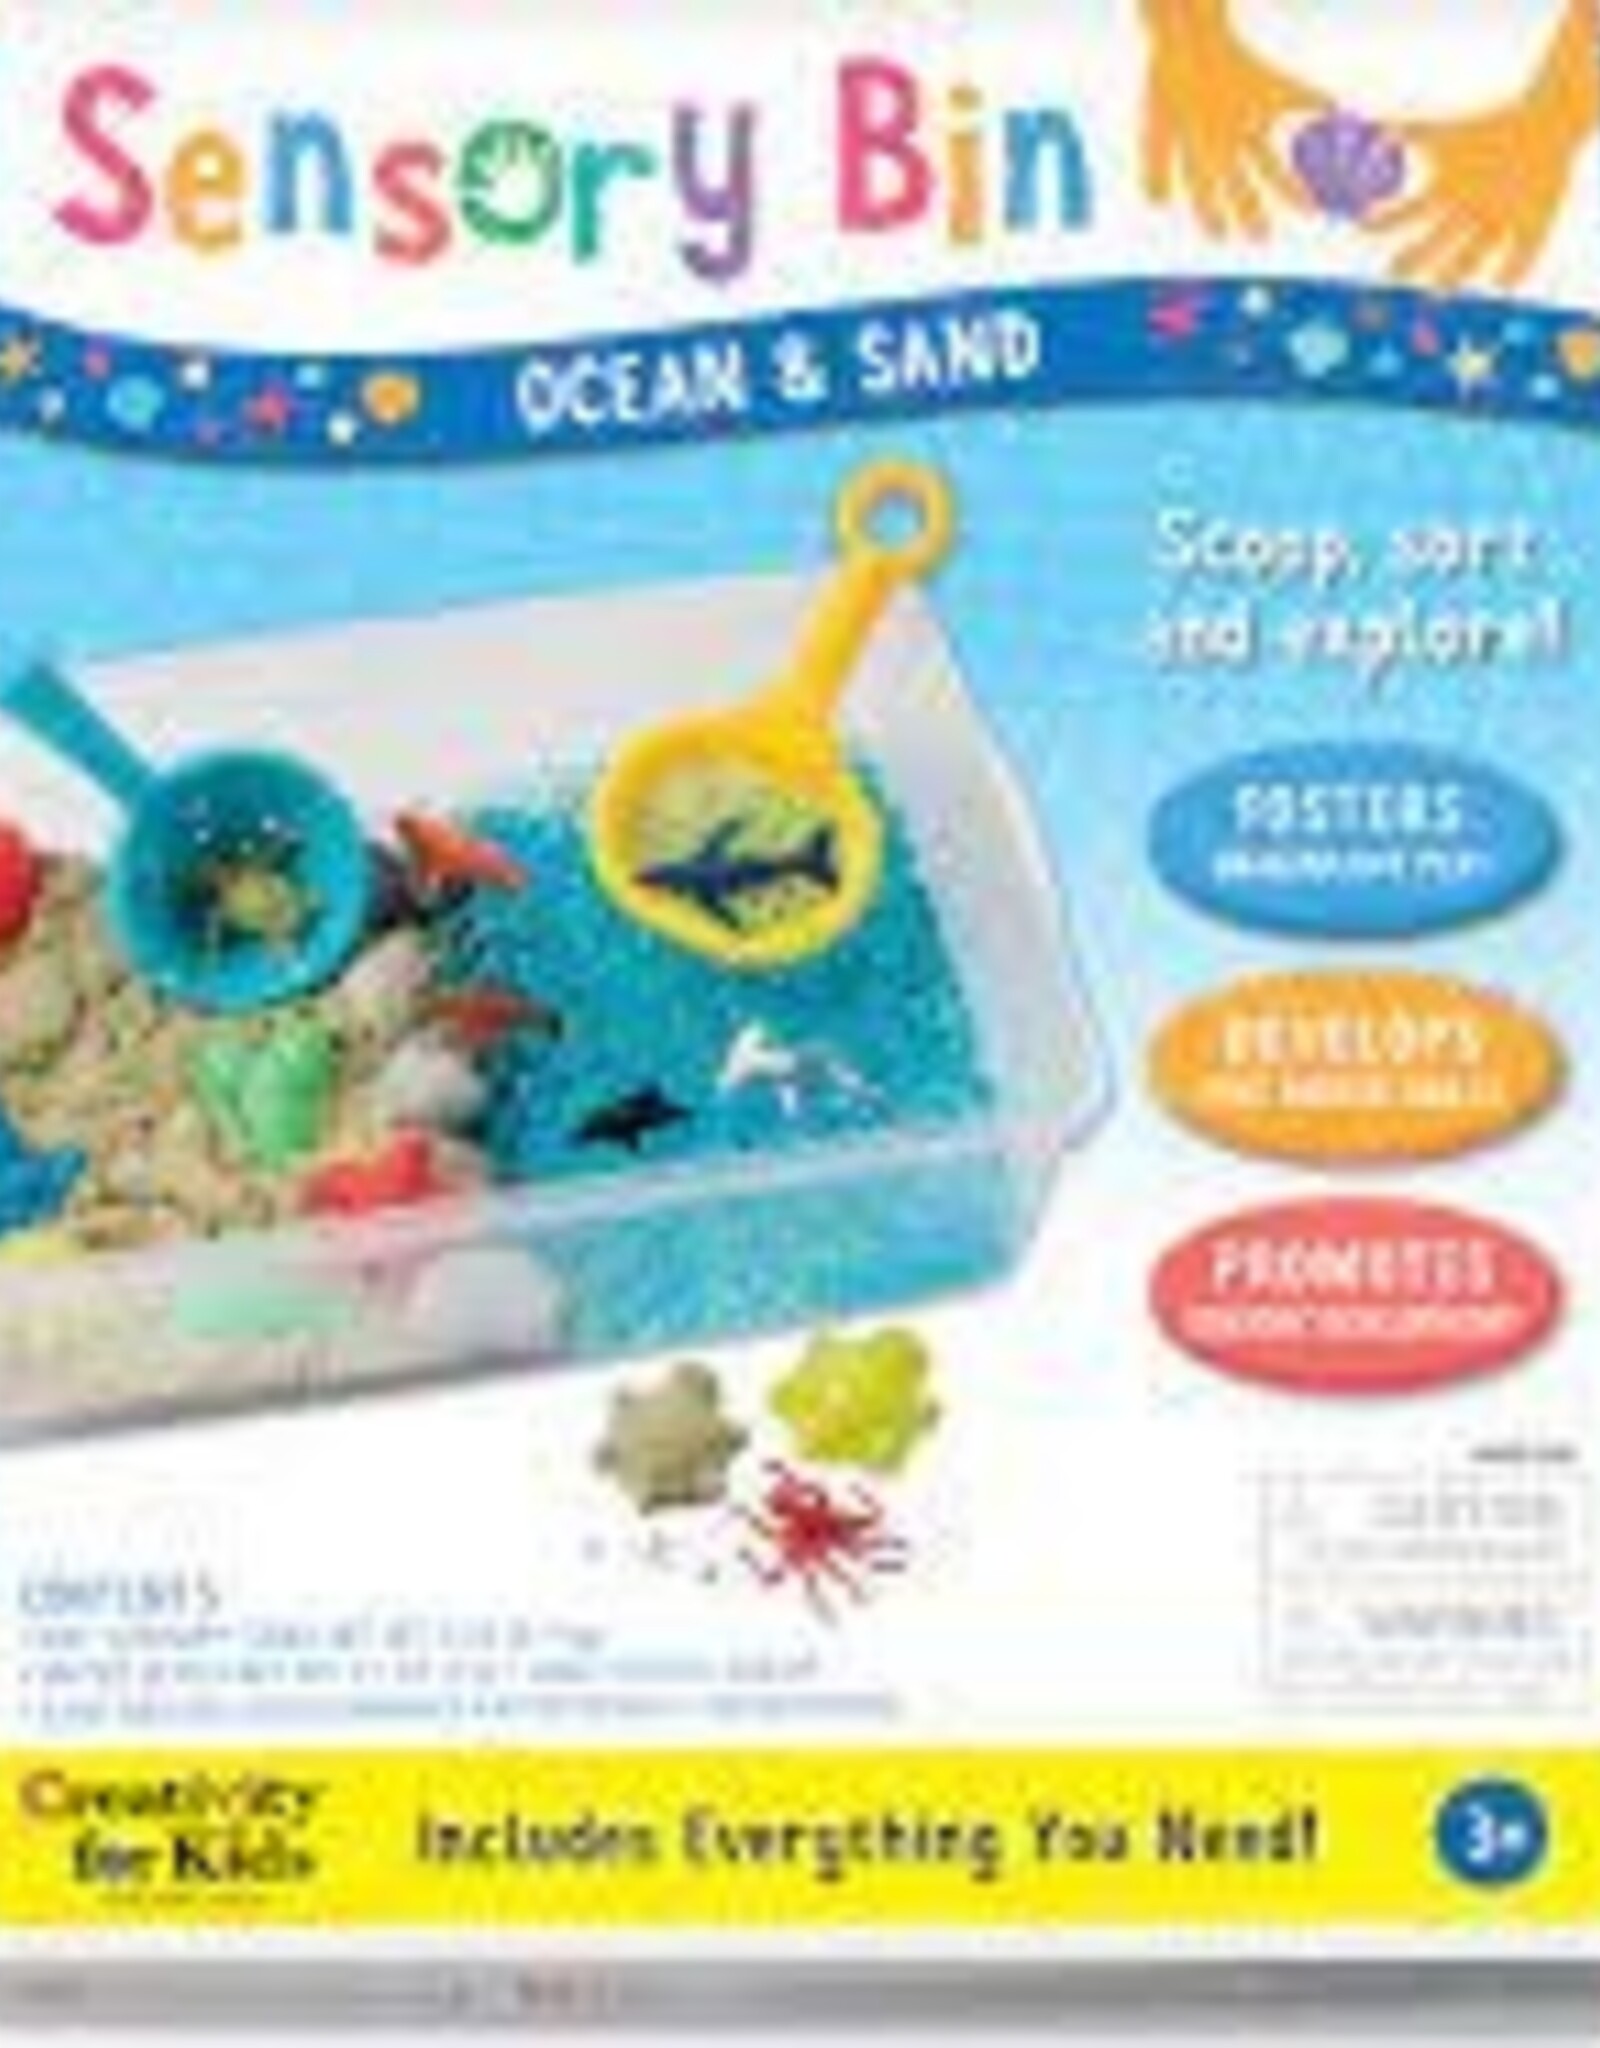 Faber Castell Sensory Bin Ocean and Sand